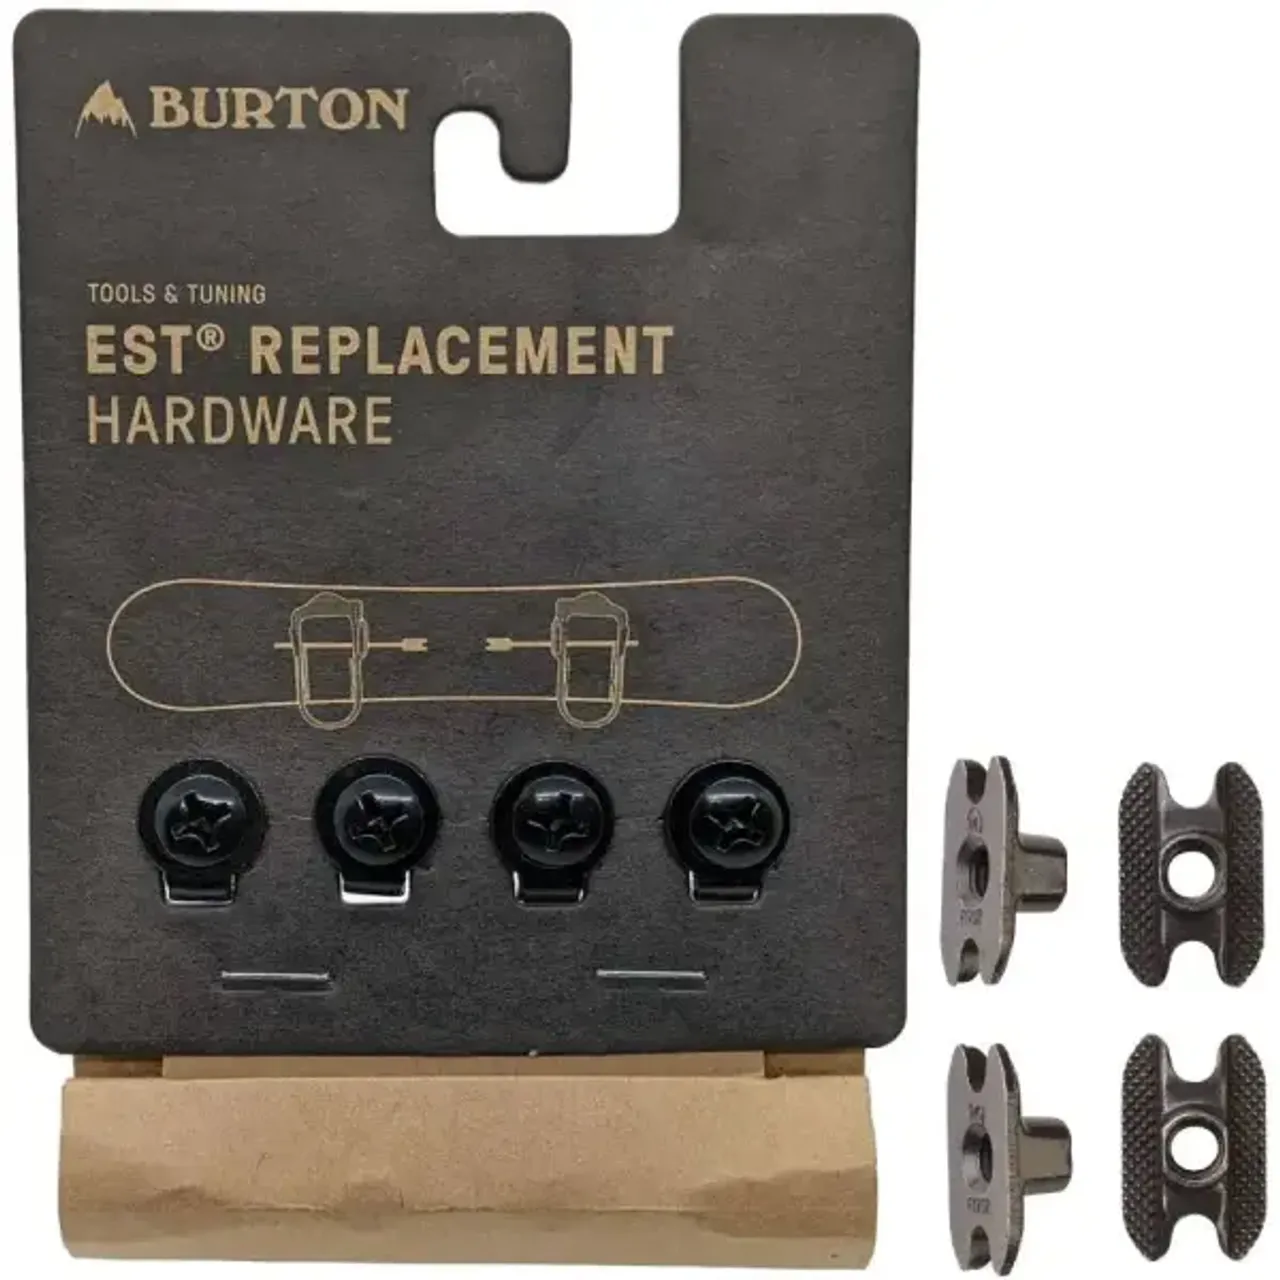 Burton M6 Channel Replacement Hardware Screws